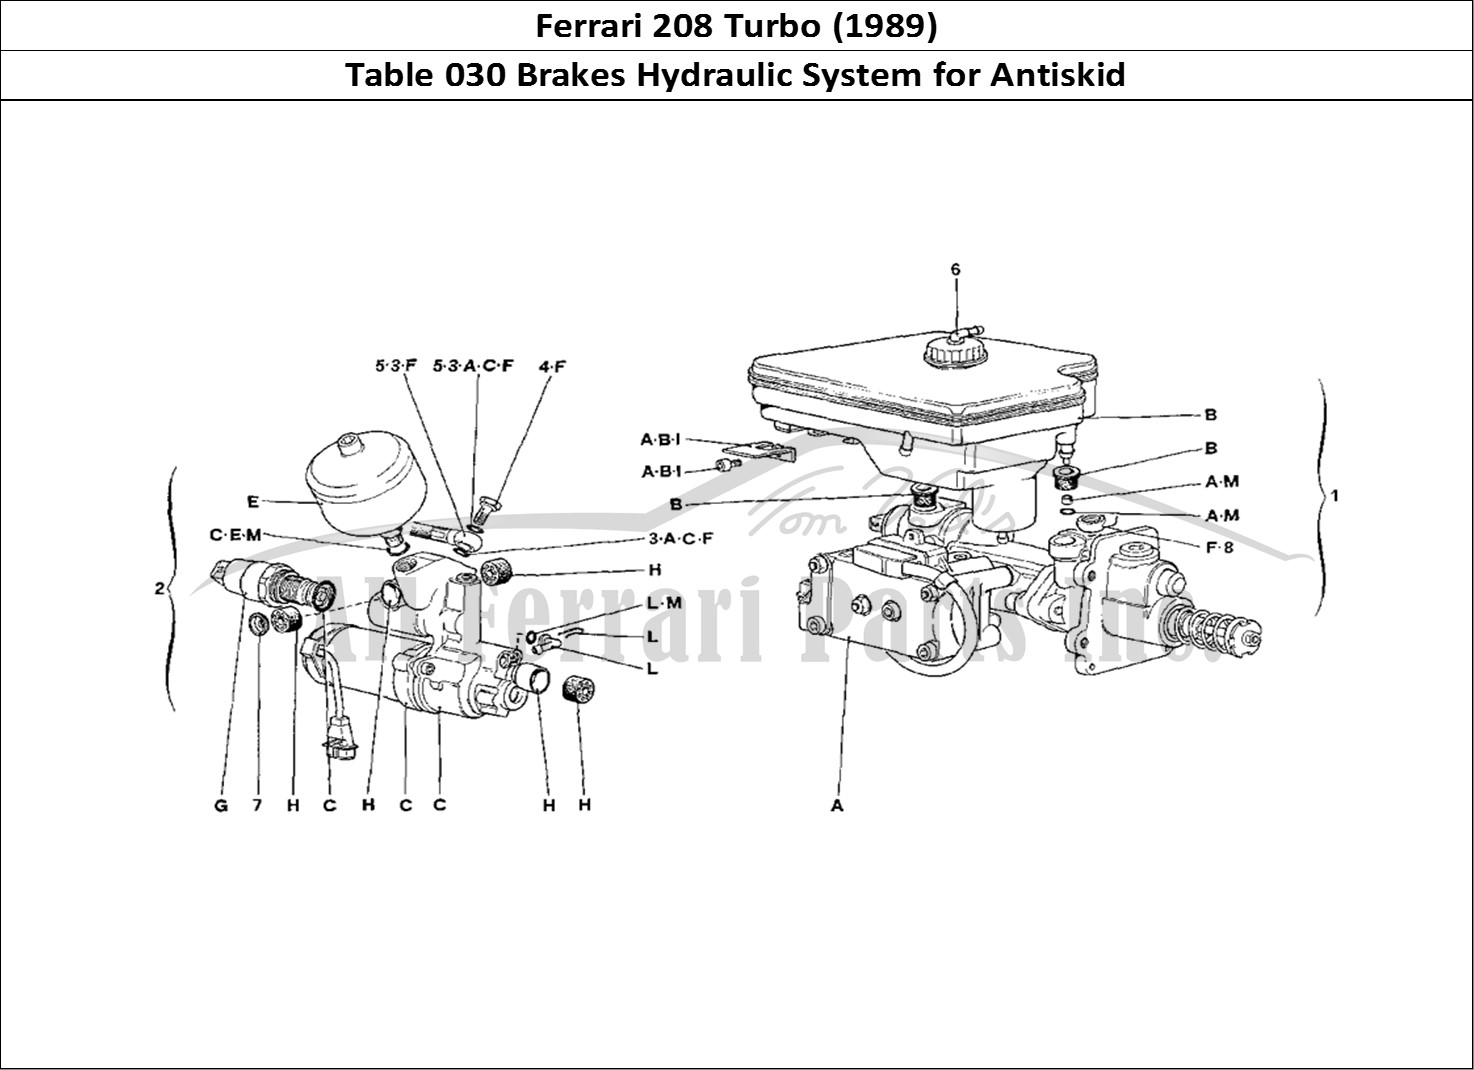 Ferrari Parts Ferrari 208 Turbo (1989) Page 030 Hydraulic System for Anti